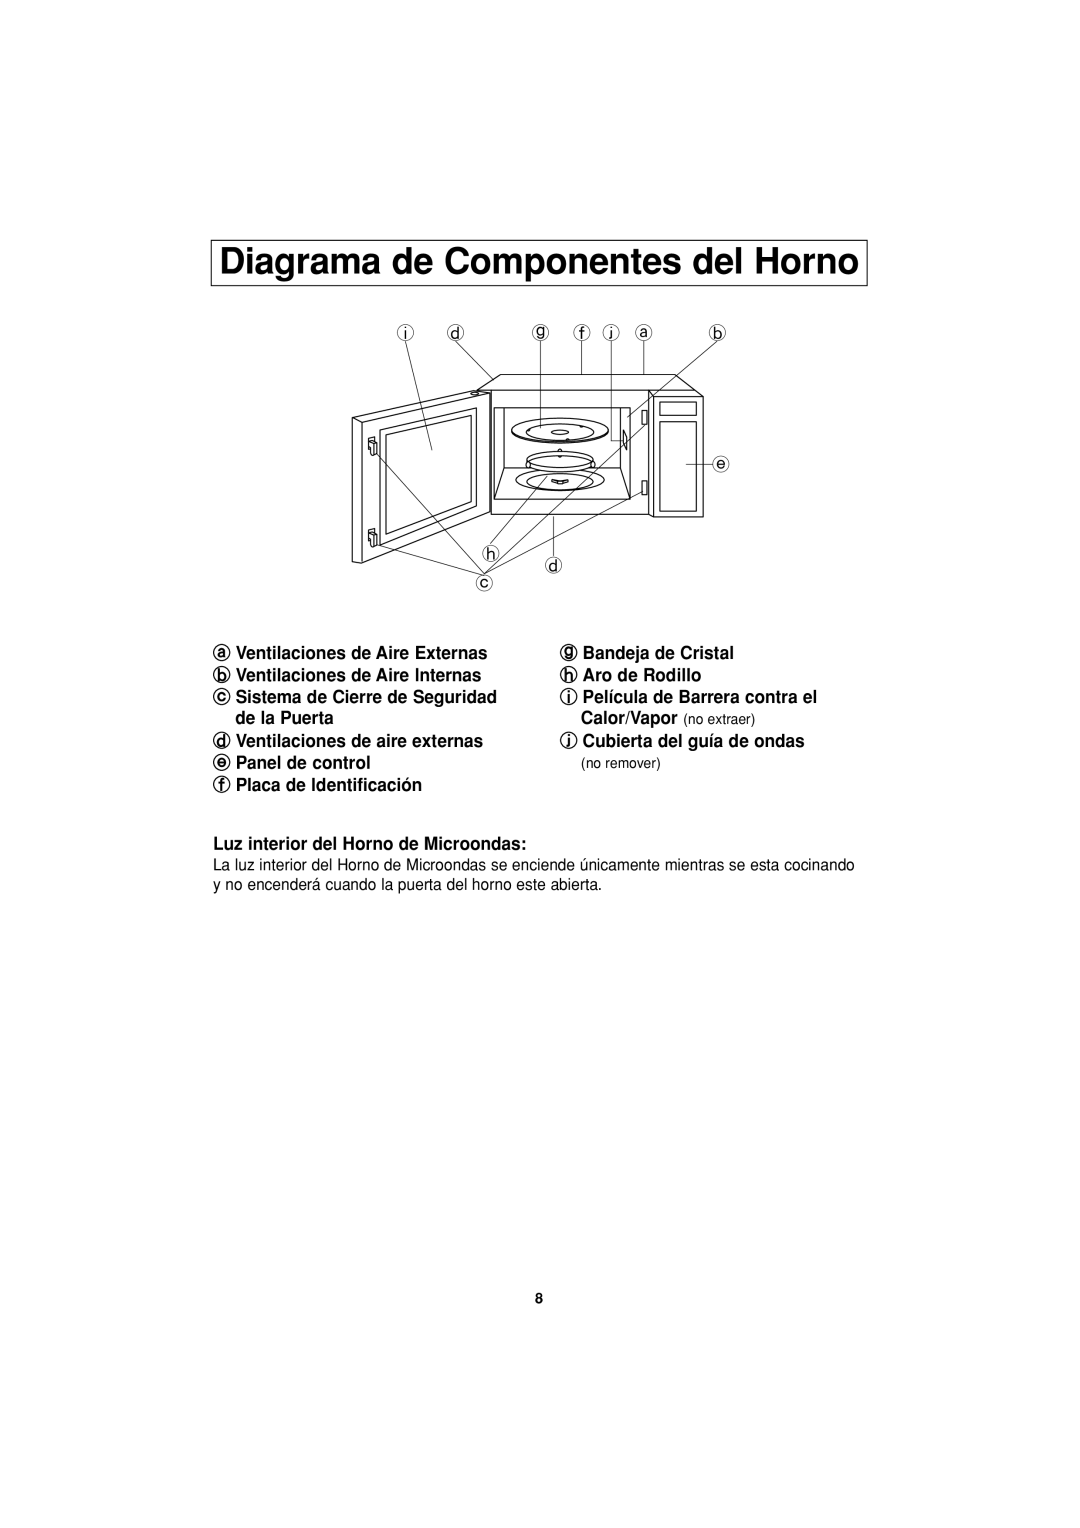 Panasonic NN-S334 important safety instructions Diagrama de Componentes del Horno 